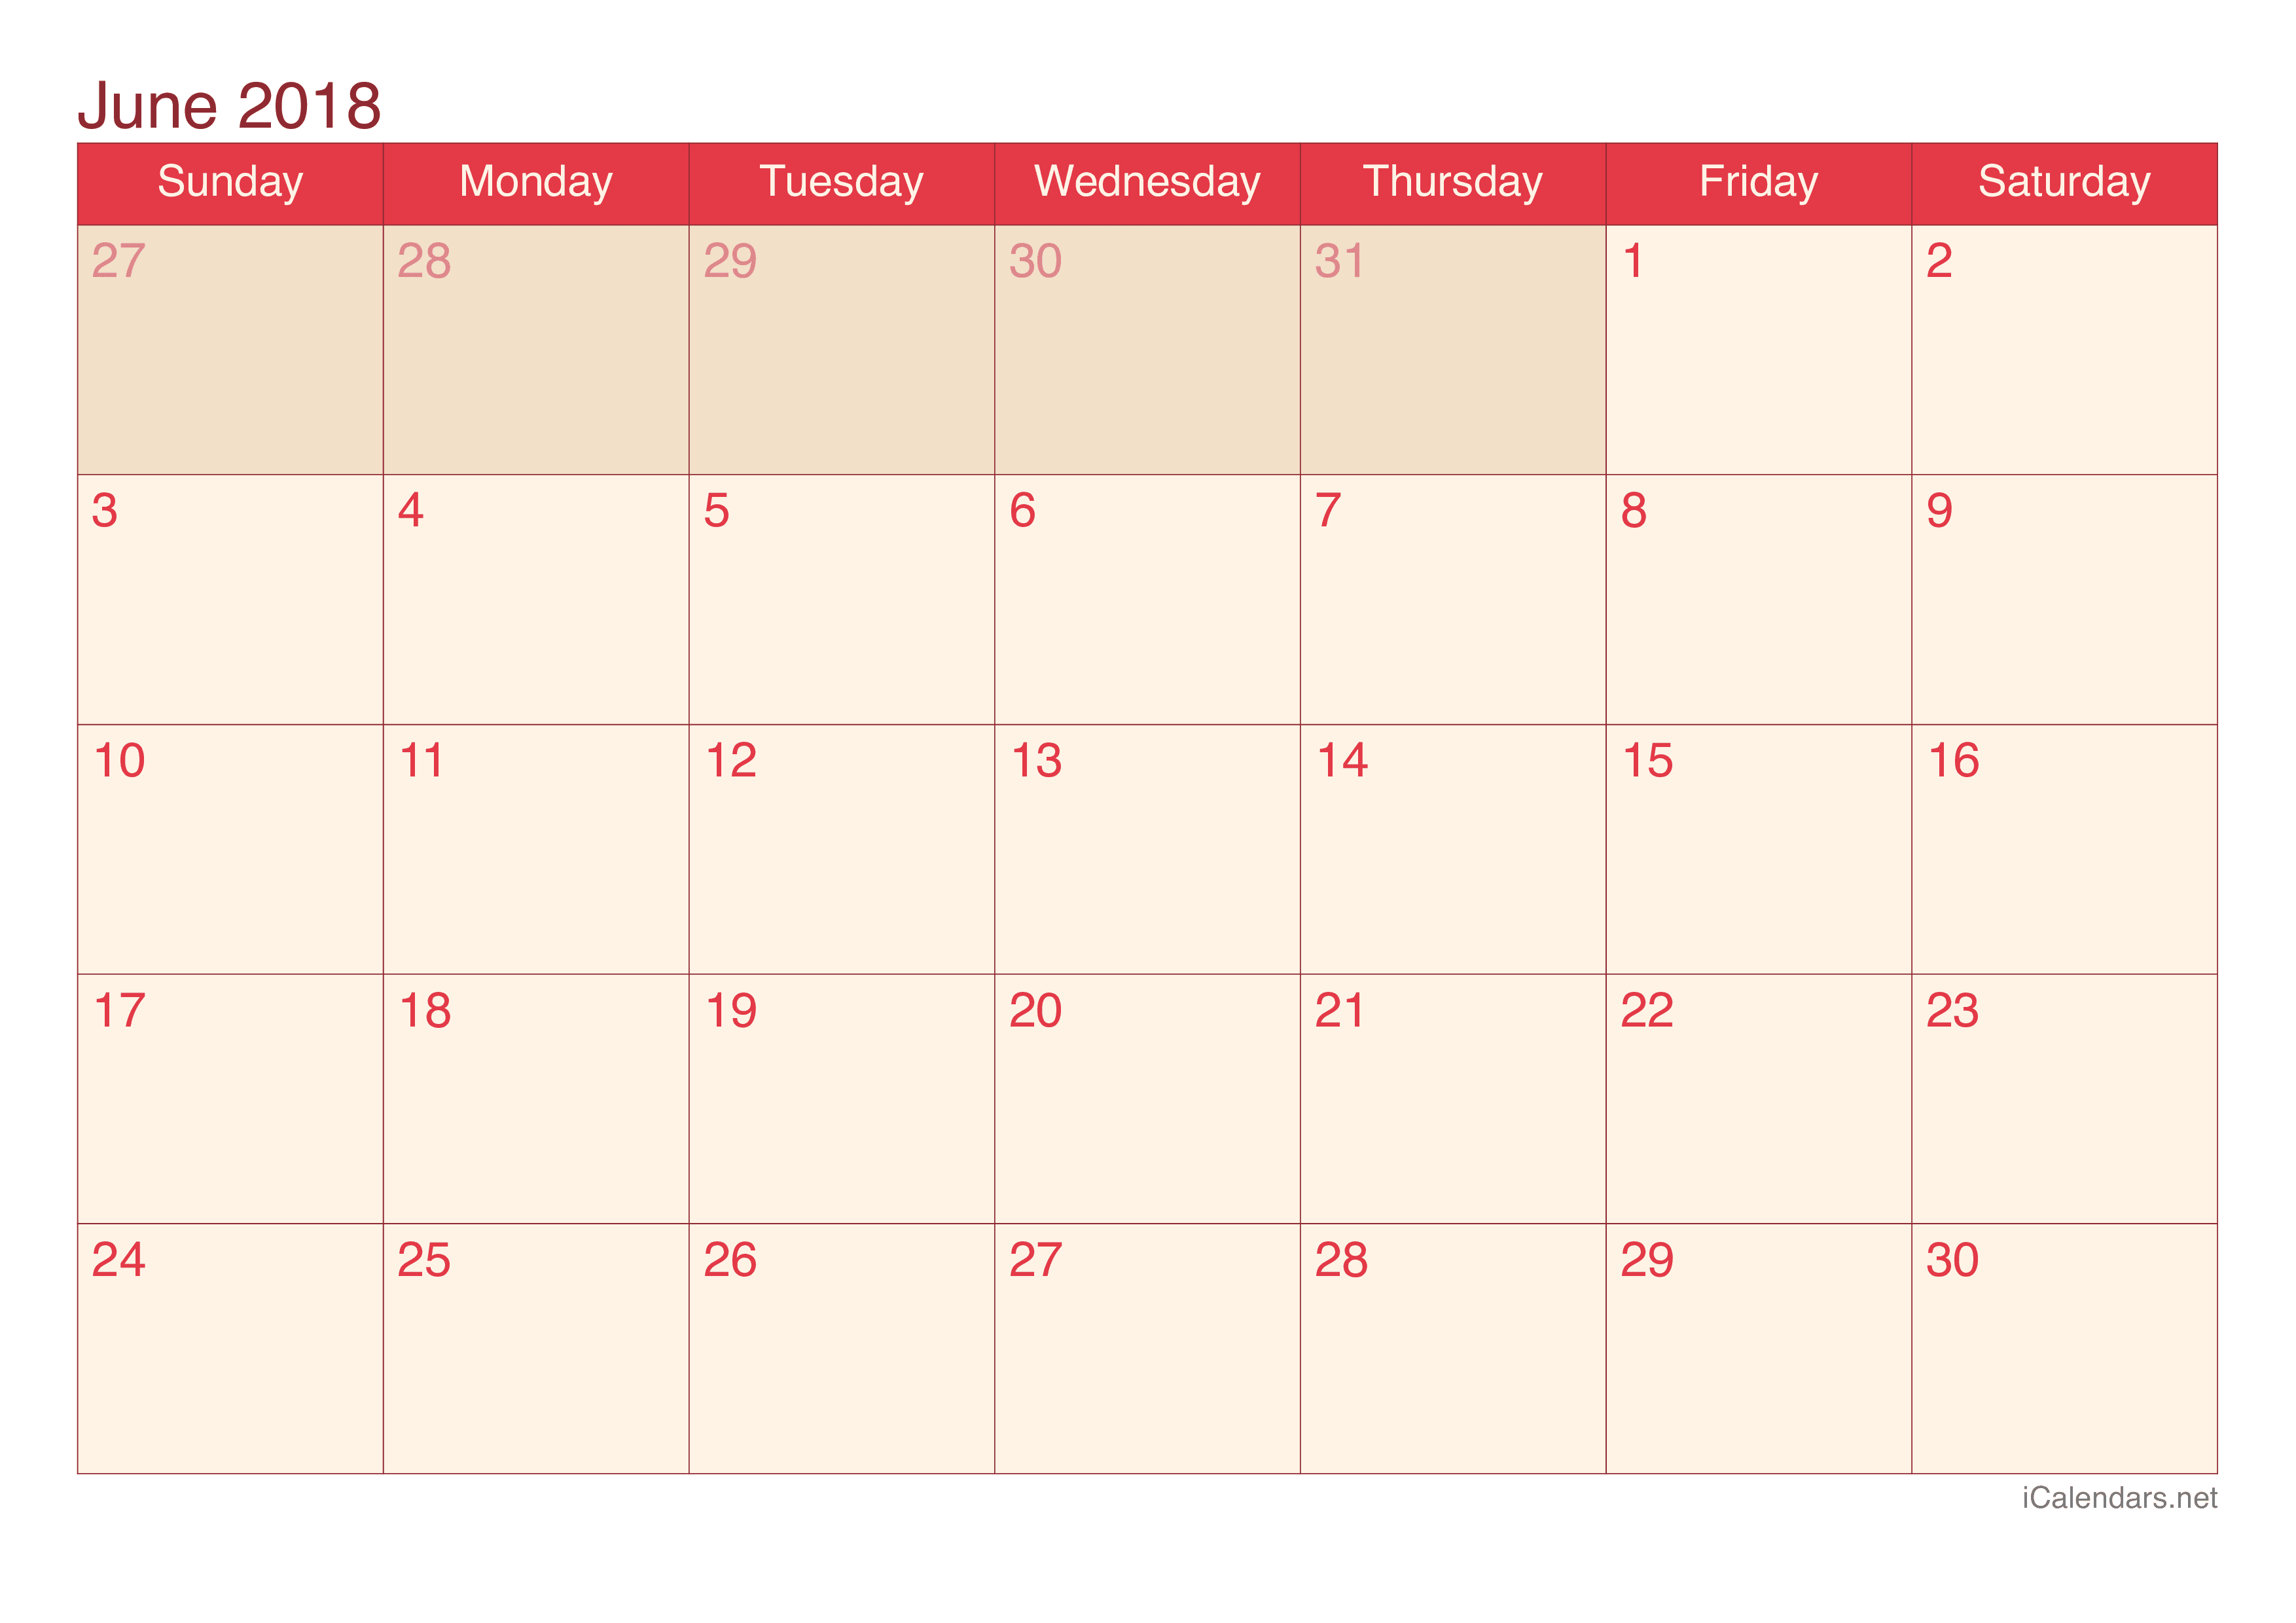 June 2018 Printable Calendar icalendars net